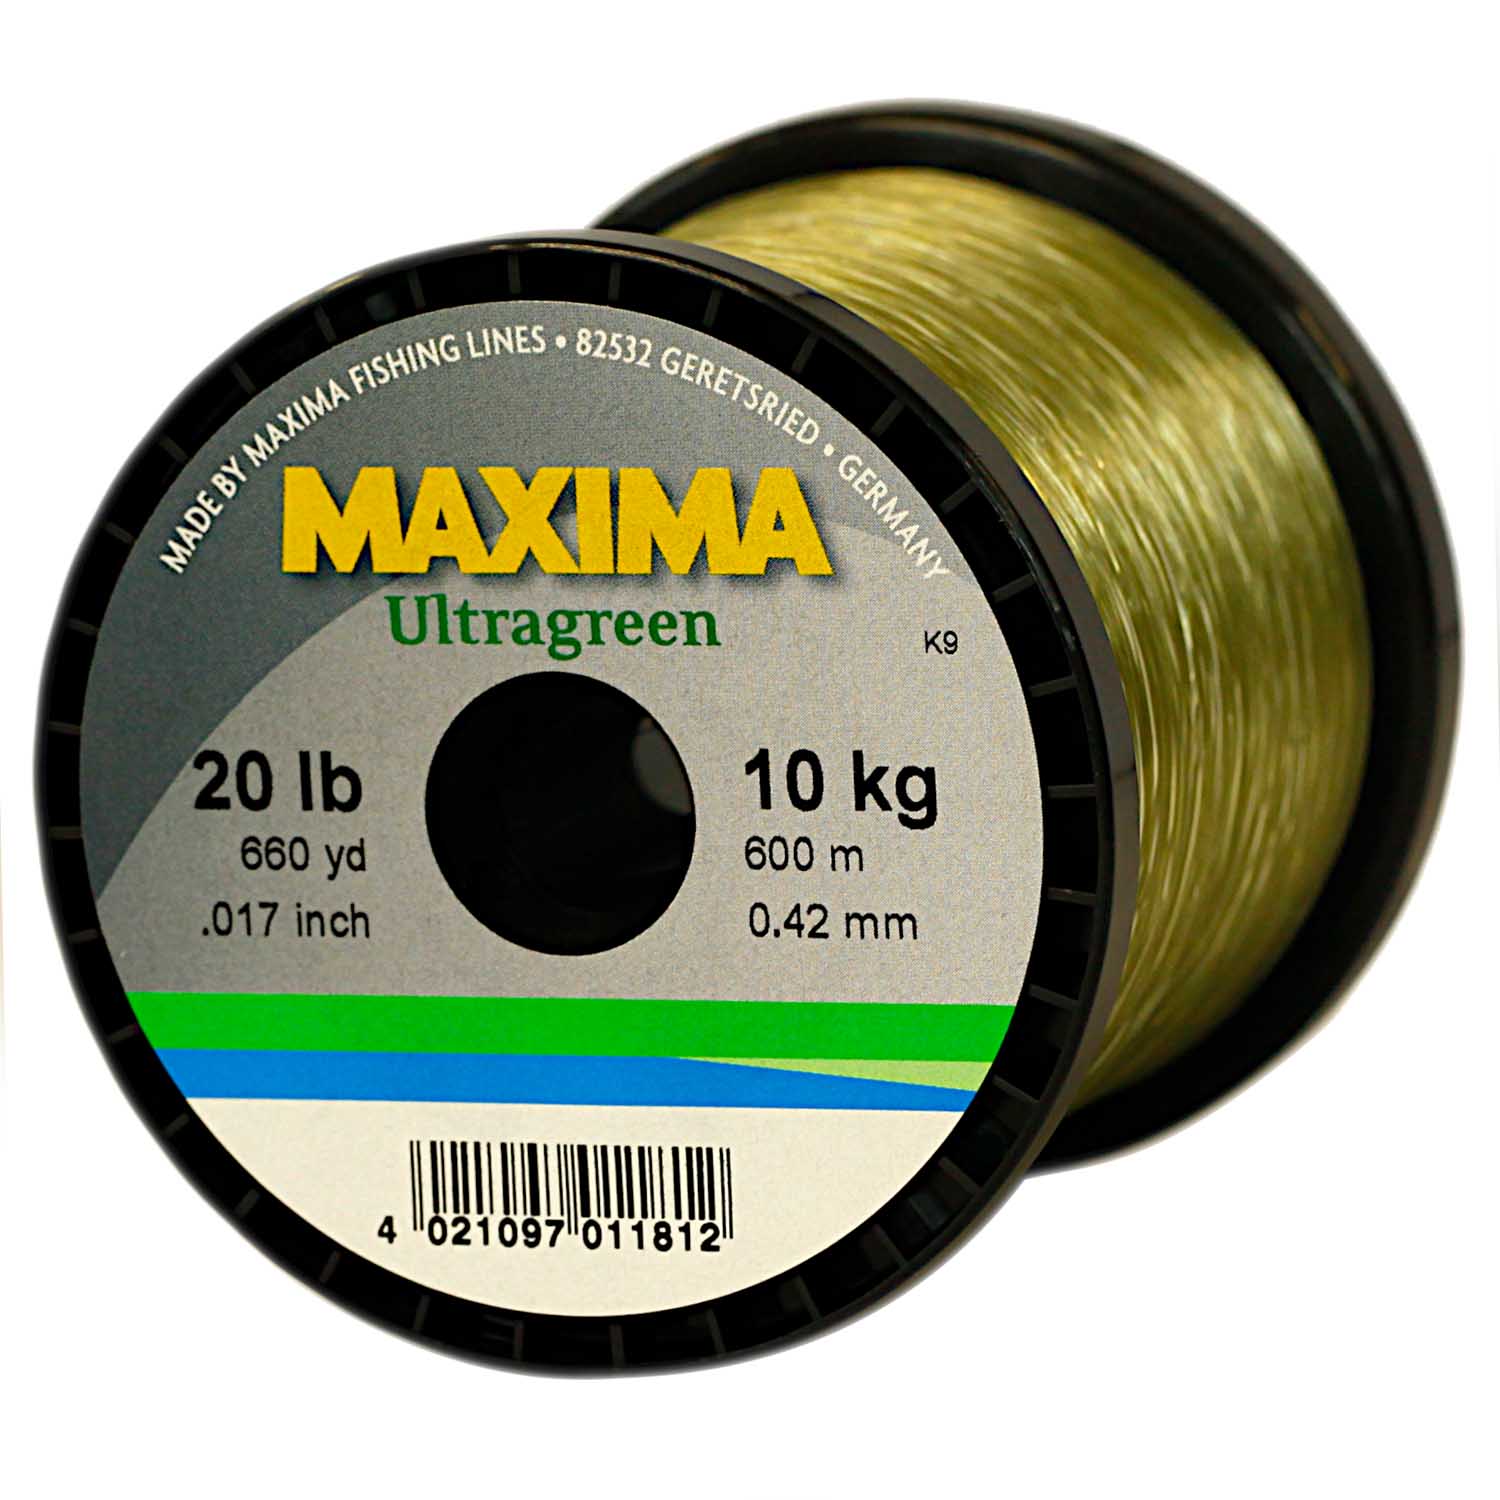 Maxima Nylon Fishing Line 4.5KG/10LB .30MM Colour Tuna Blue 600m